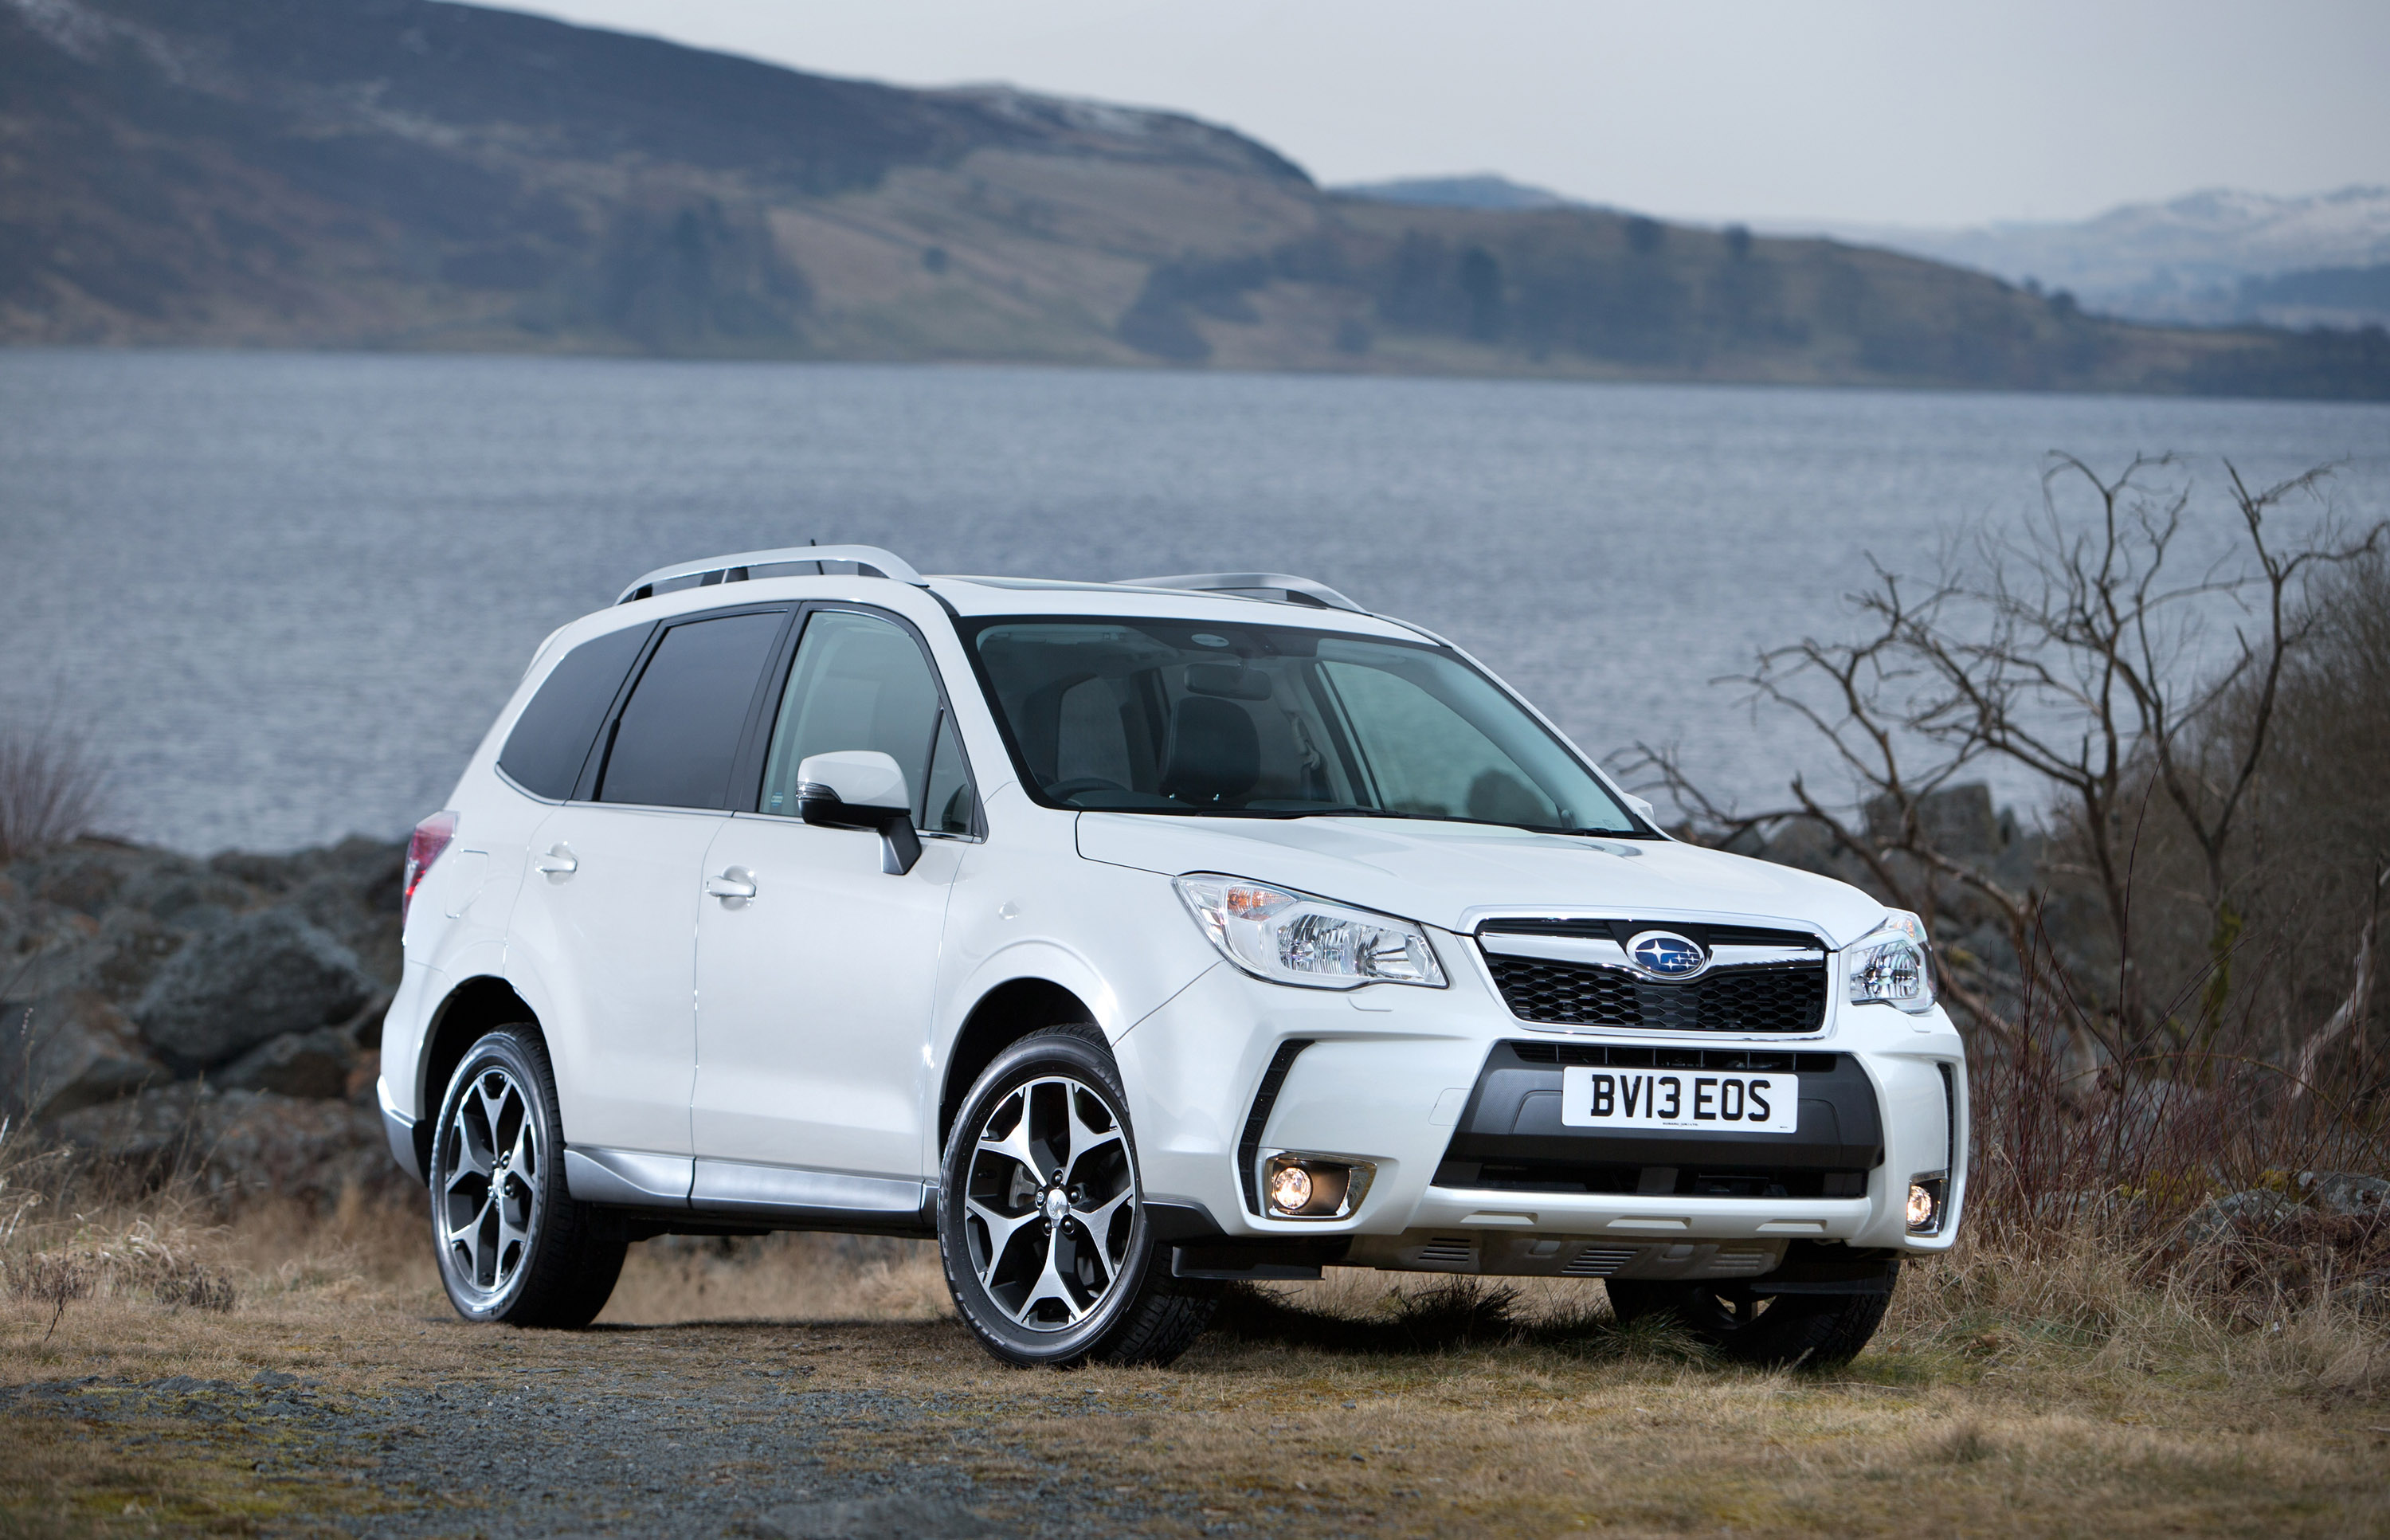 2013 Subaru Forester XT UK Price £24,995